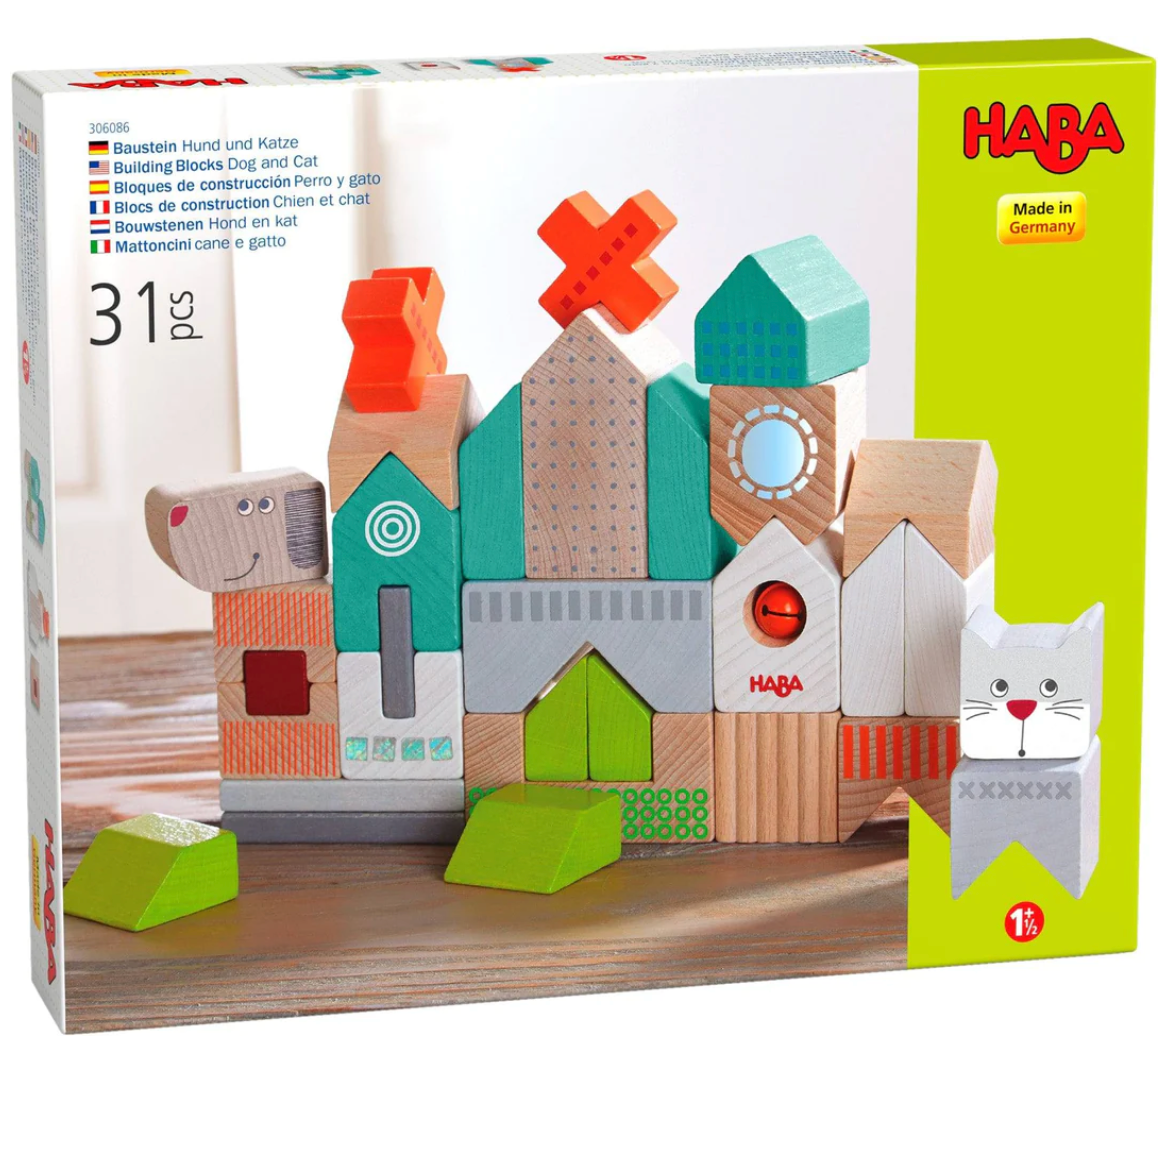 HABA Dog and Cat Building Block Set